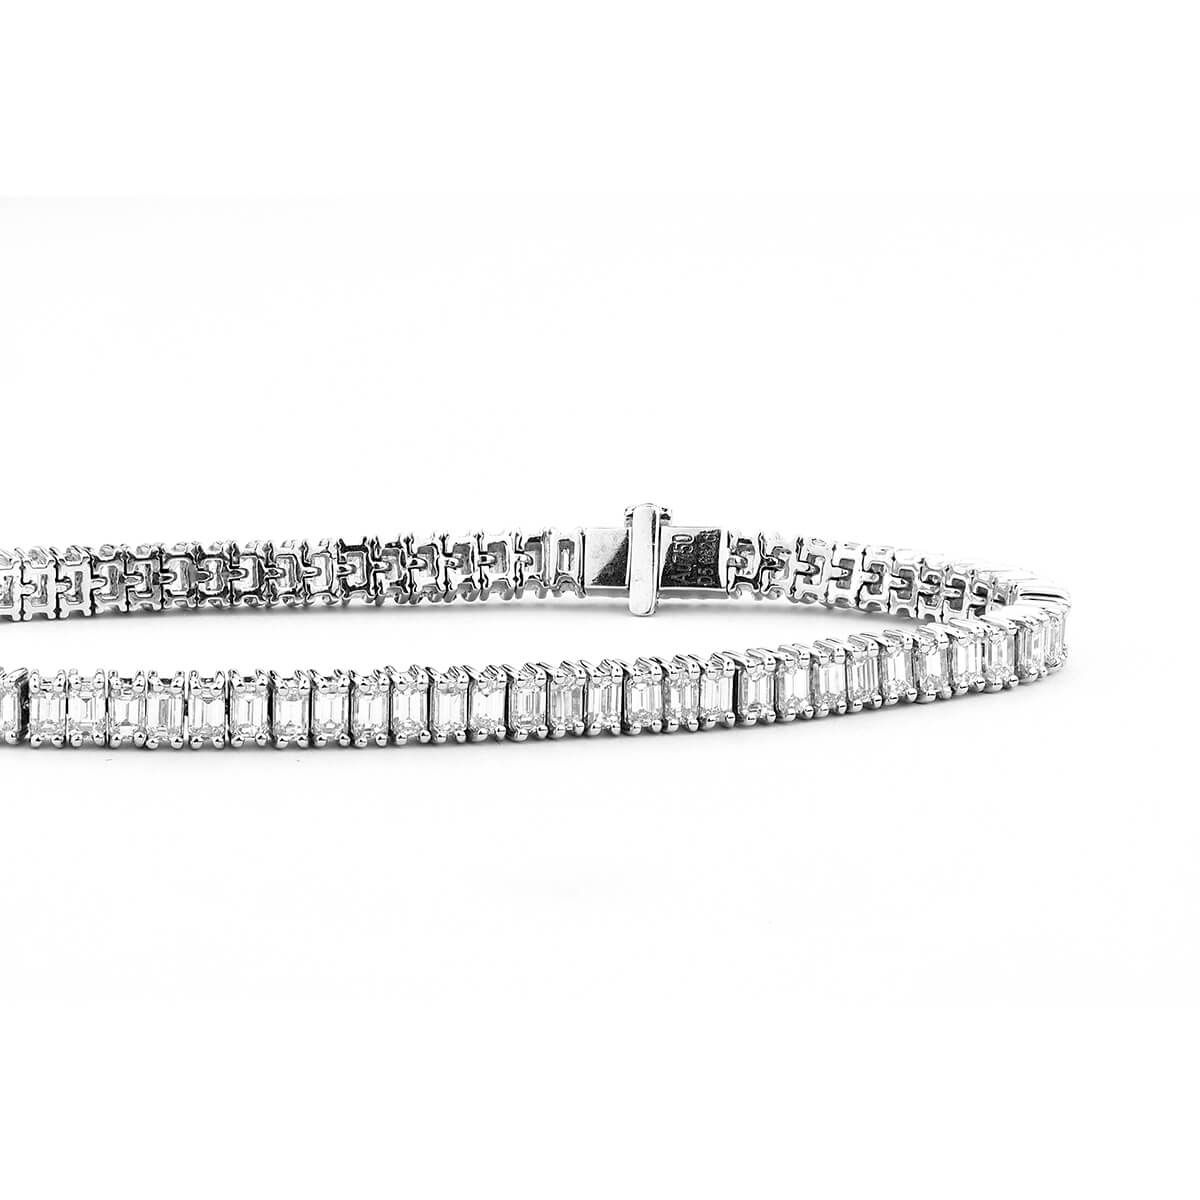  White Diamond Bracelet, 5.69 Ct. TW, Emerald shape